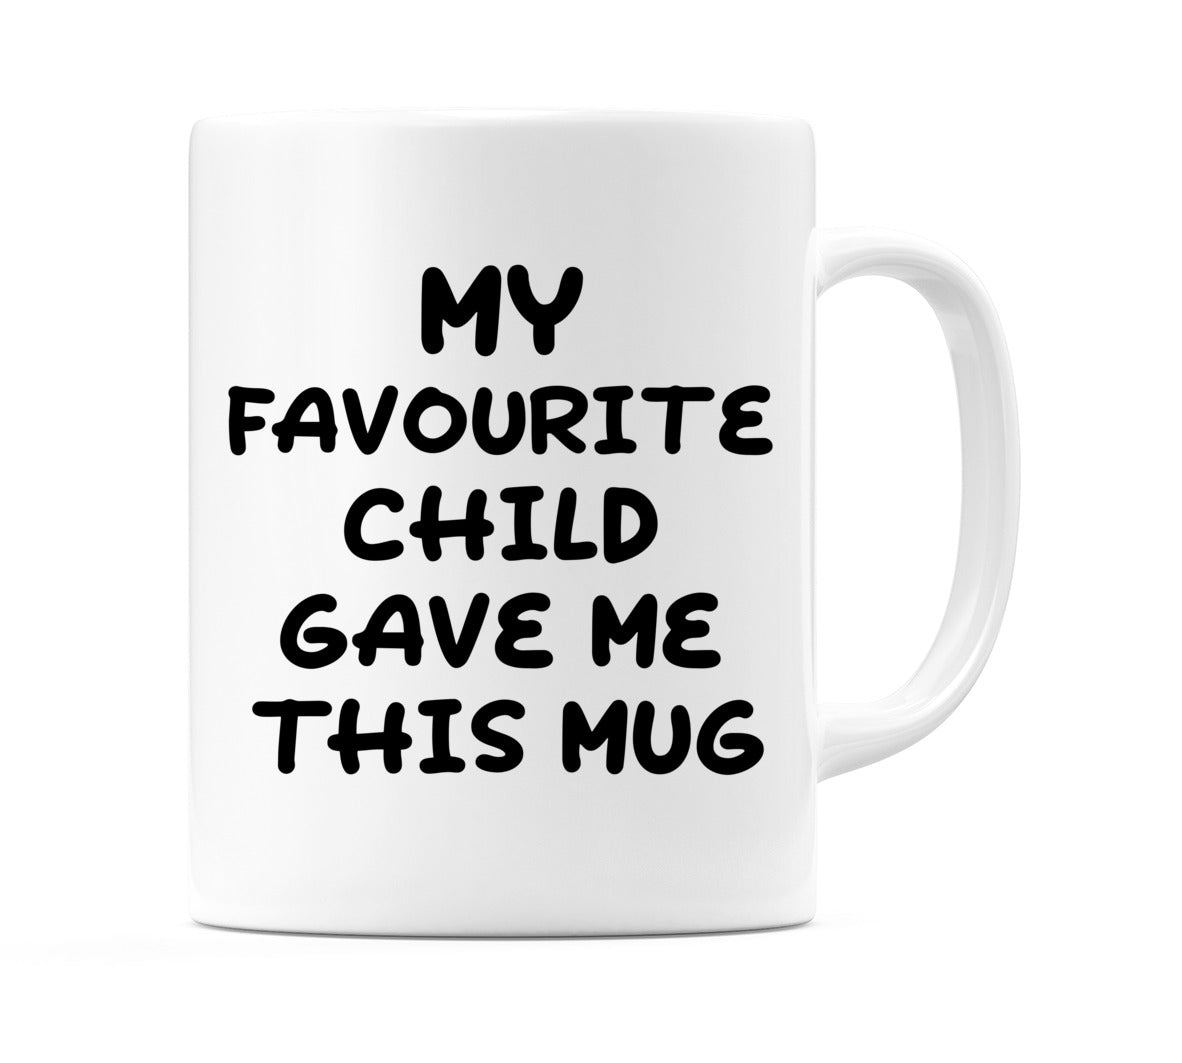 My Favourite Child Gave me this Mug Mug